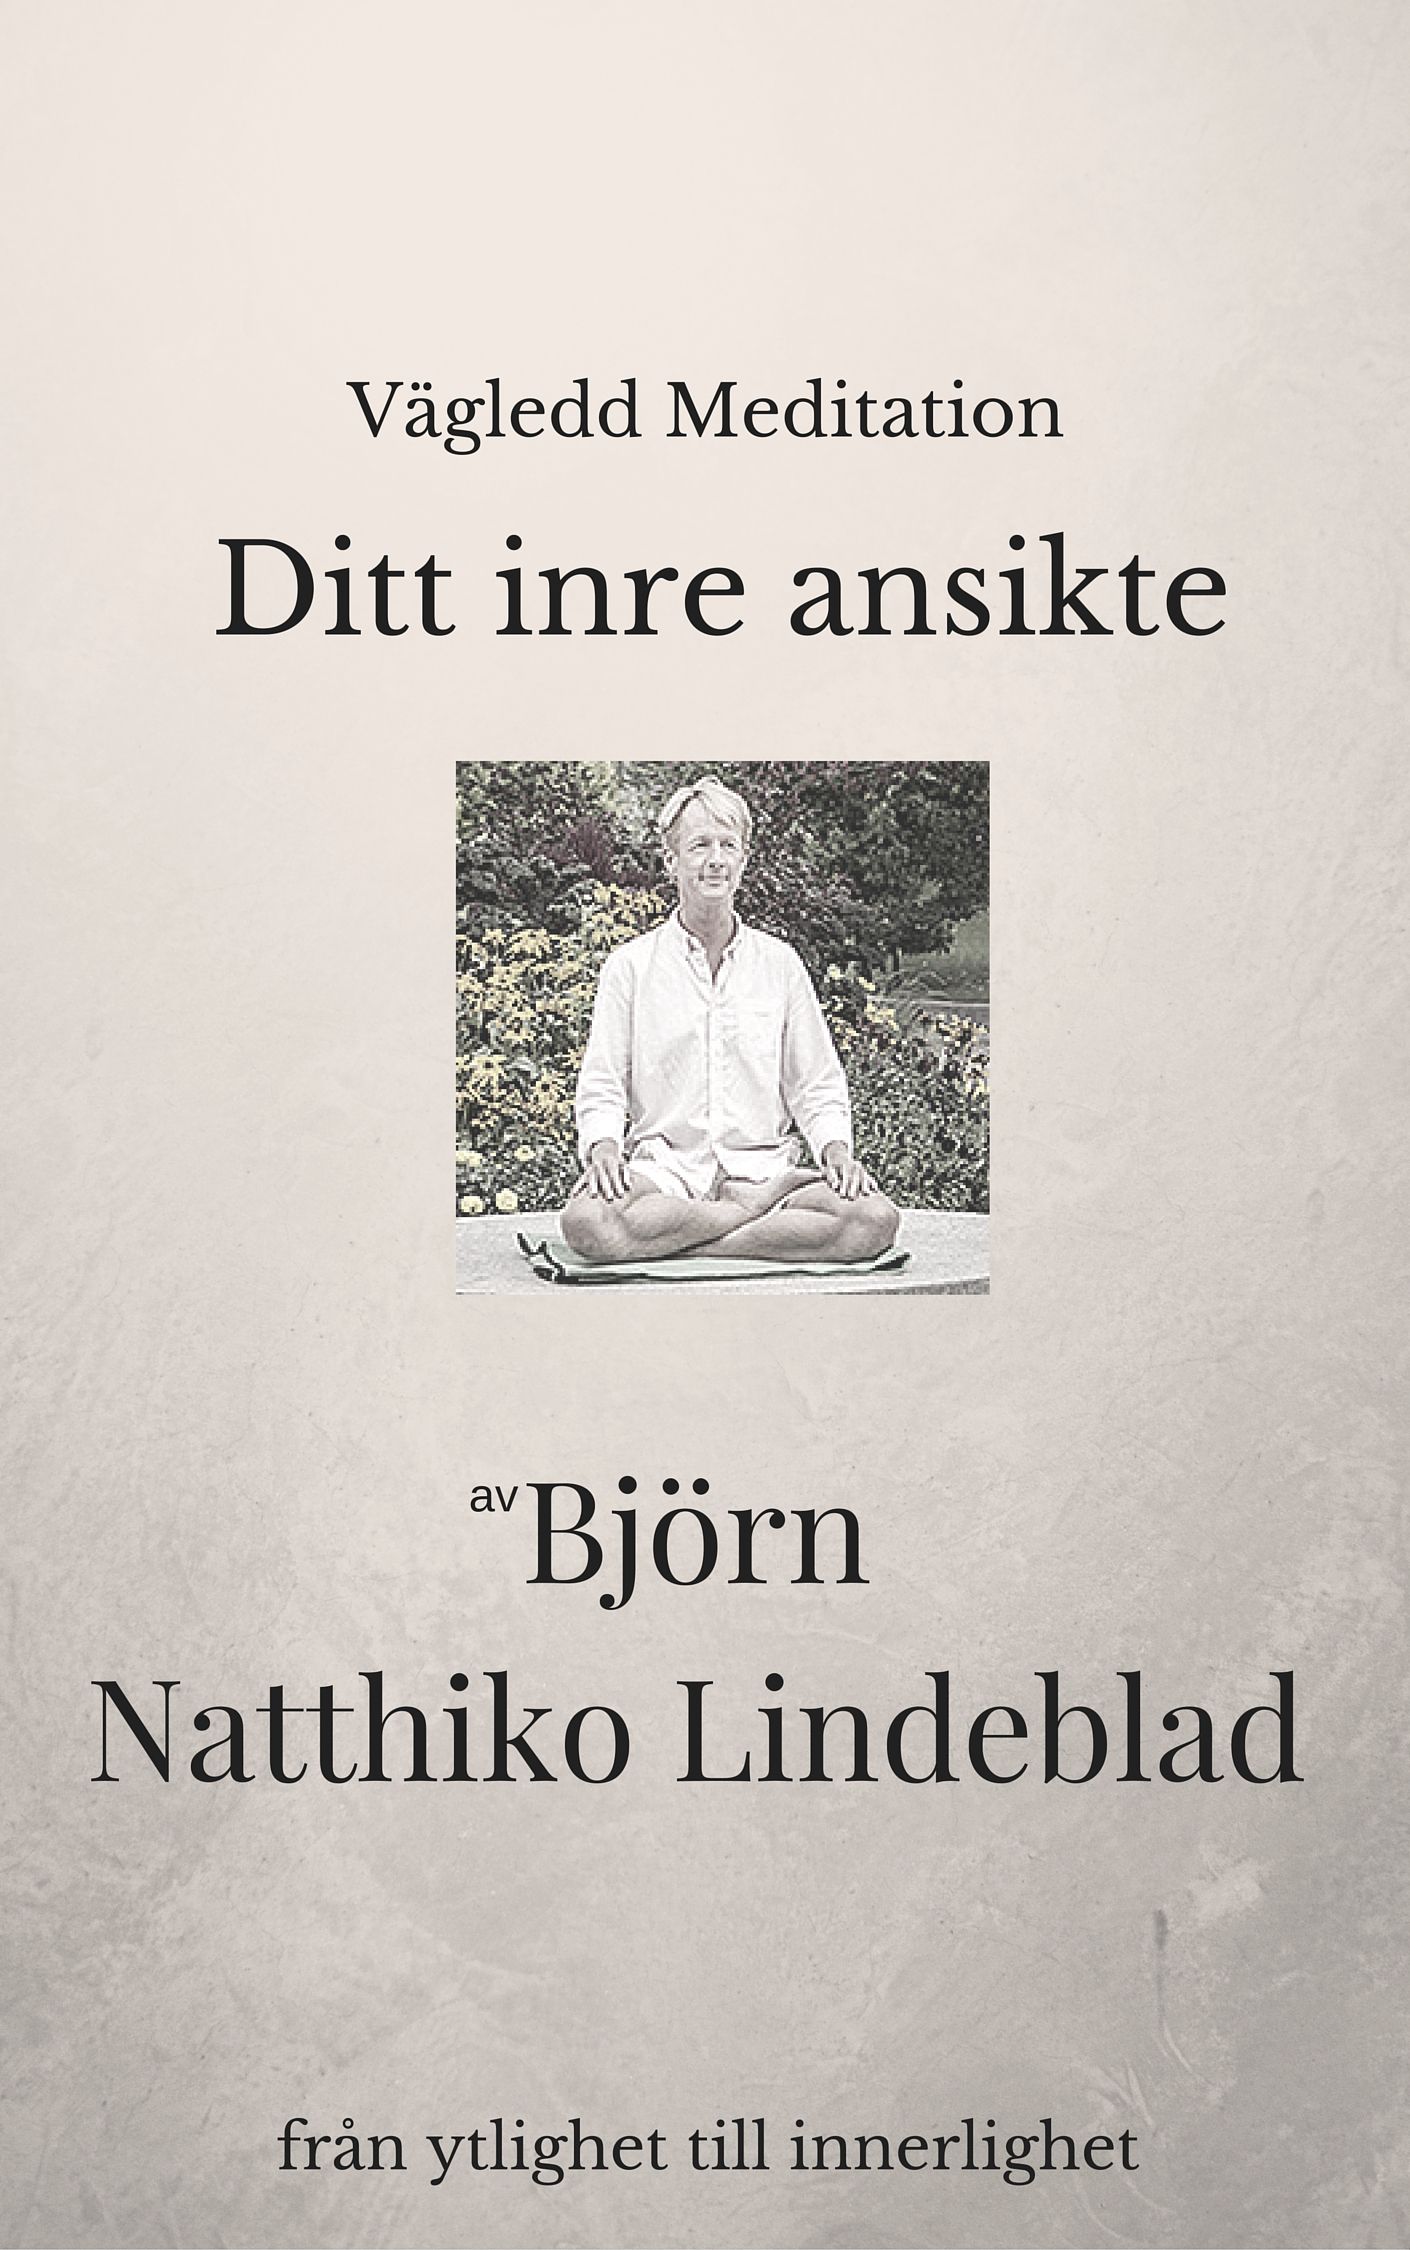 Ditt inre ansikte , audiobook by Björn Natthiko Lindeblad